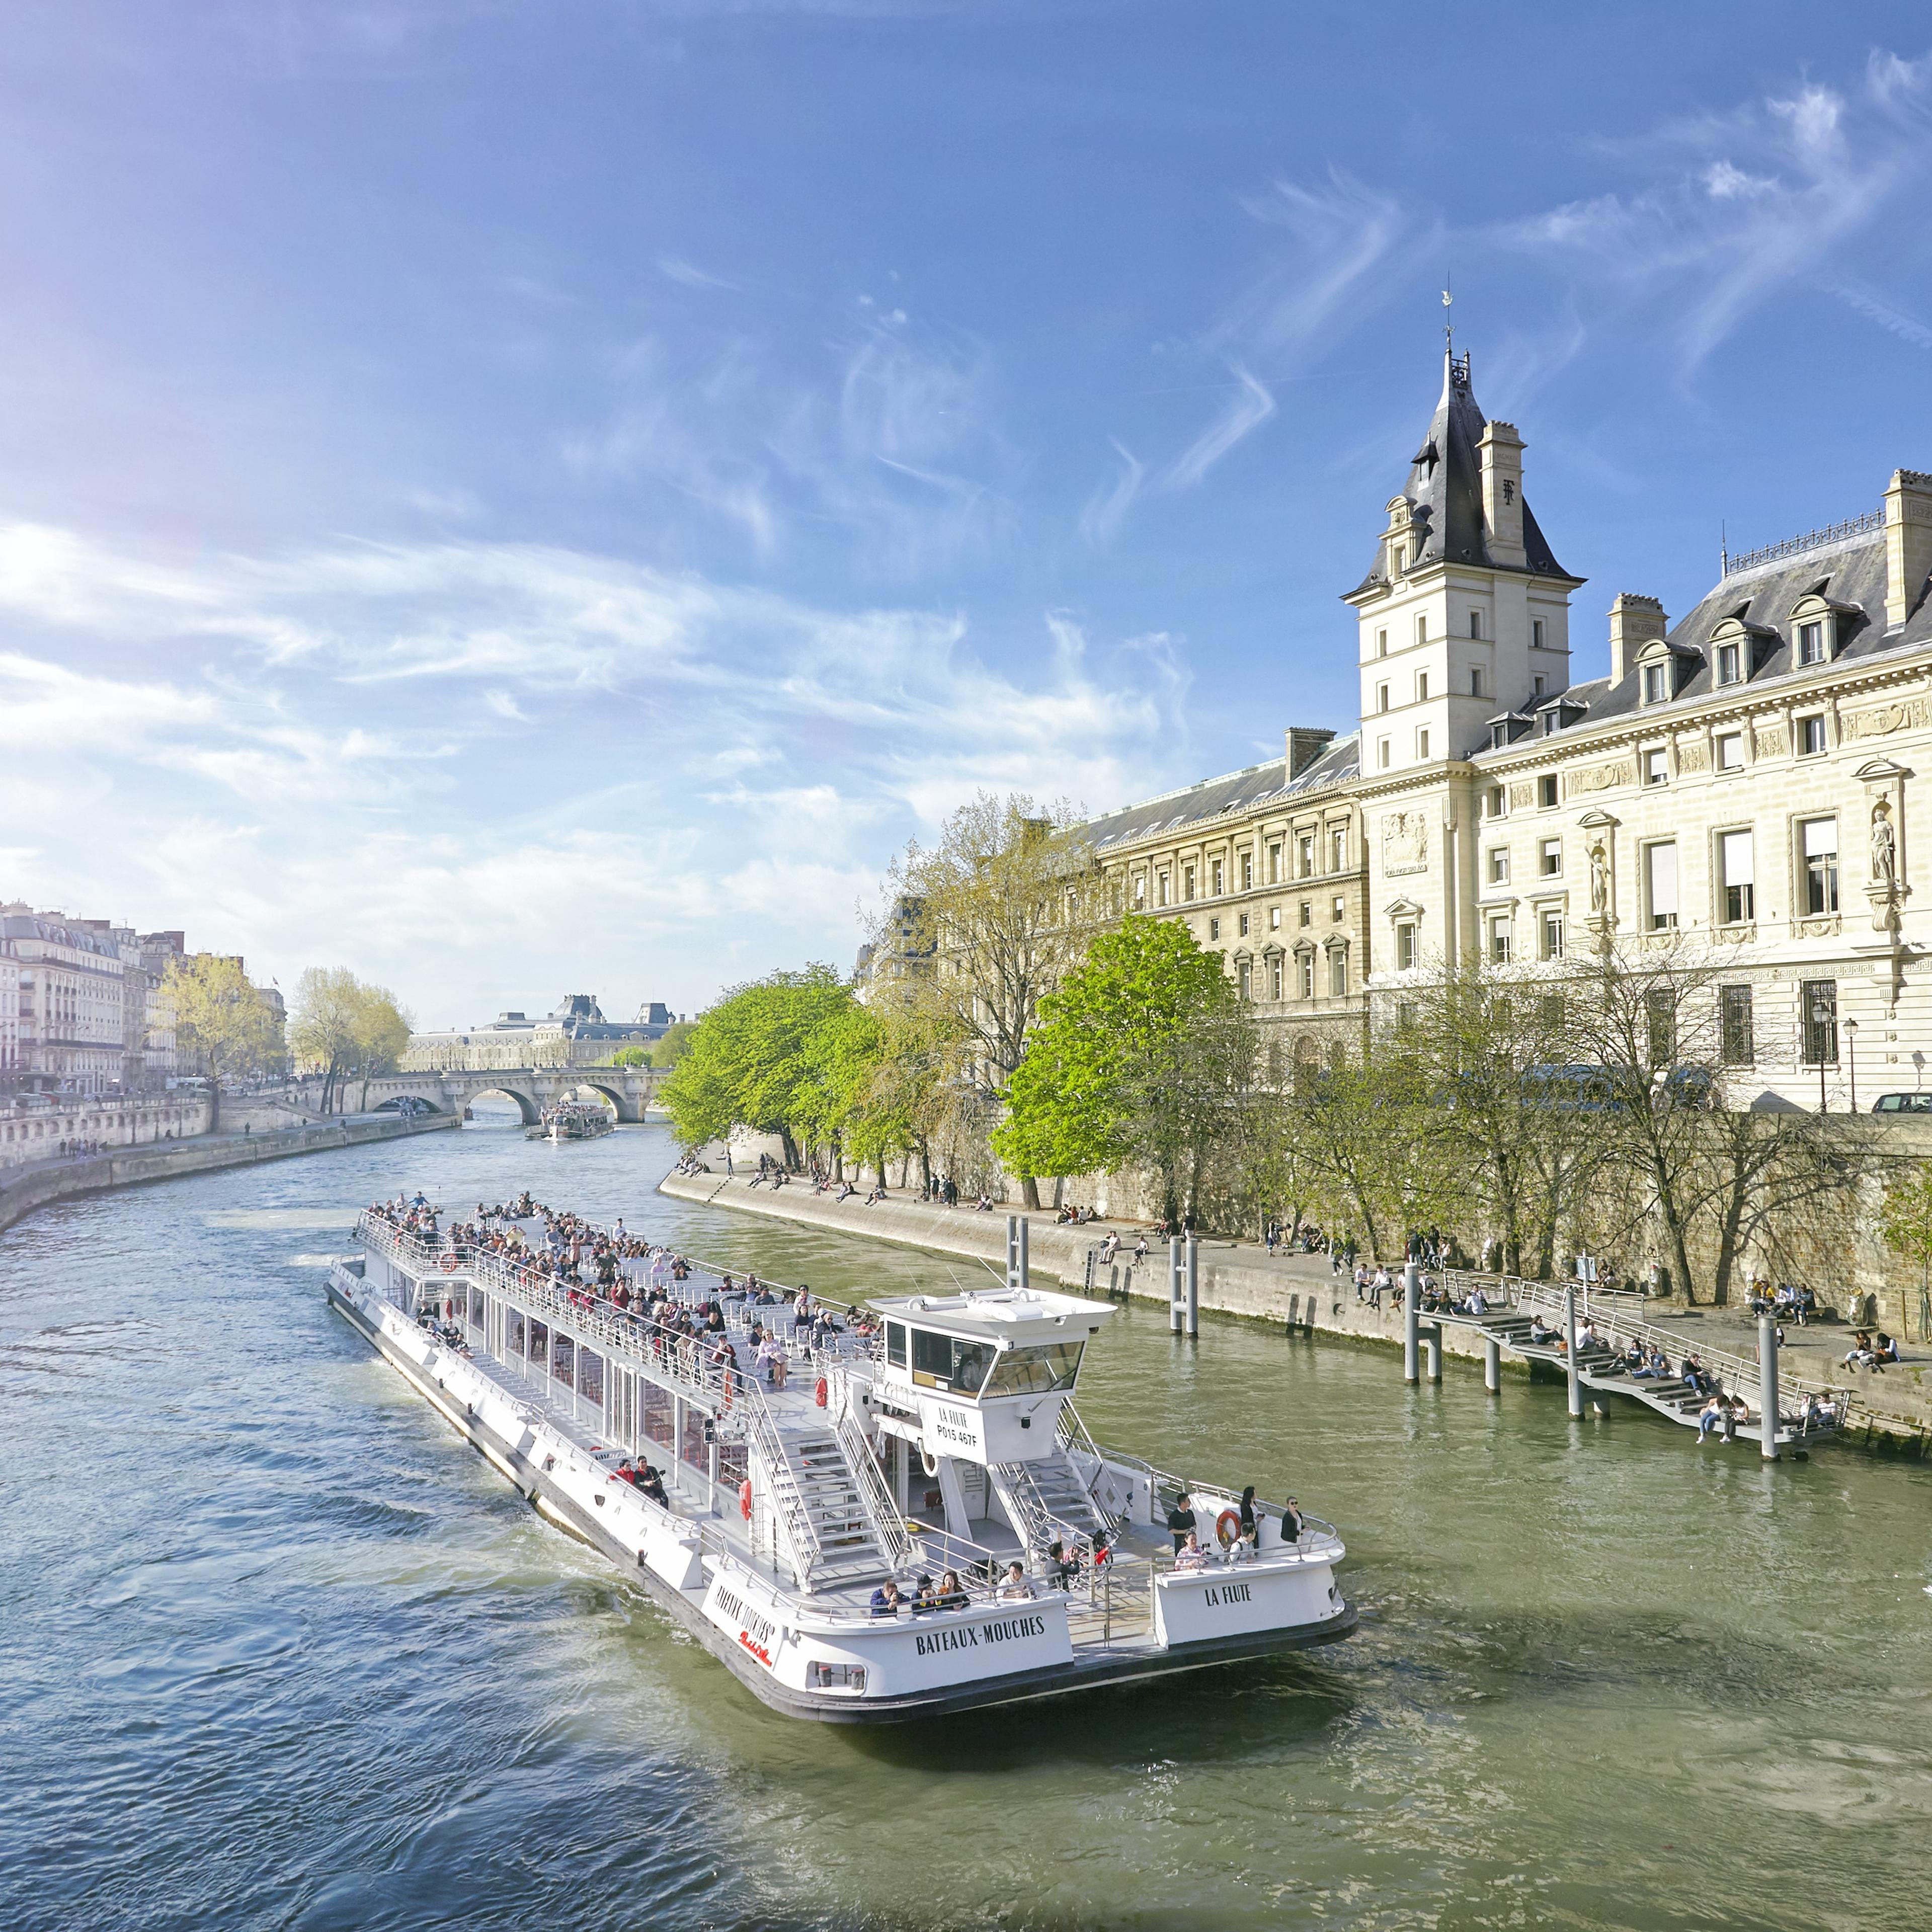 Tourist ferry on the River Seine, Paris, France